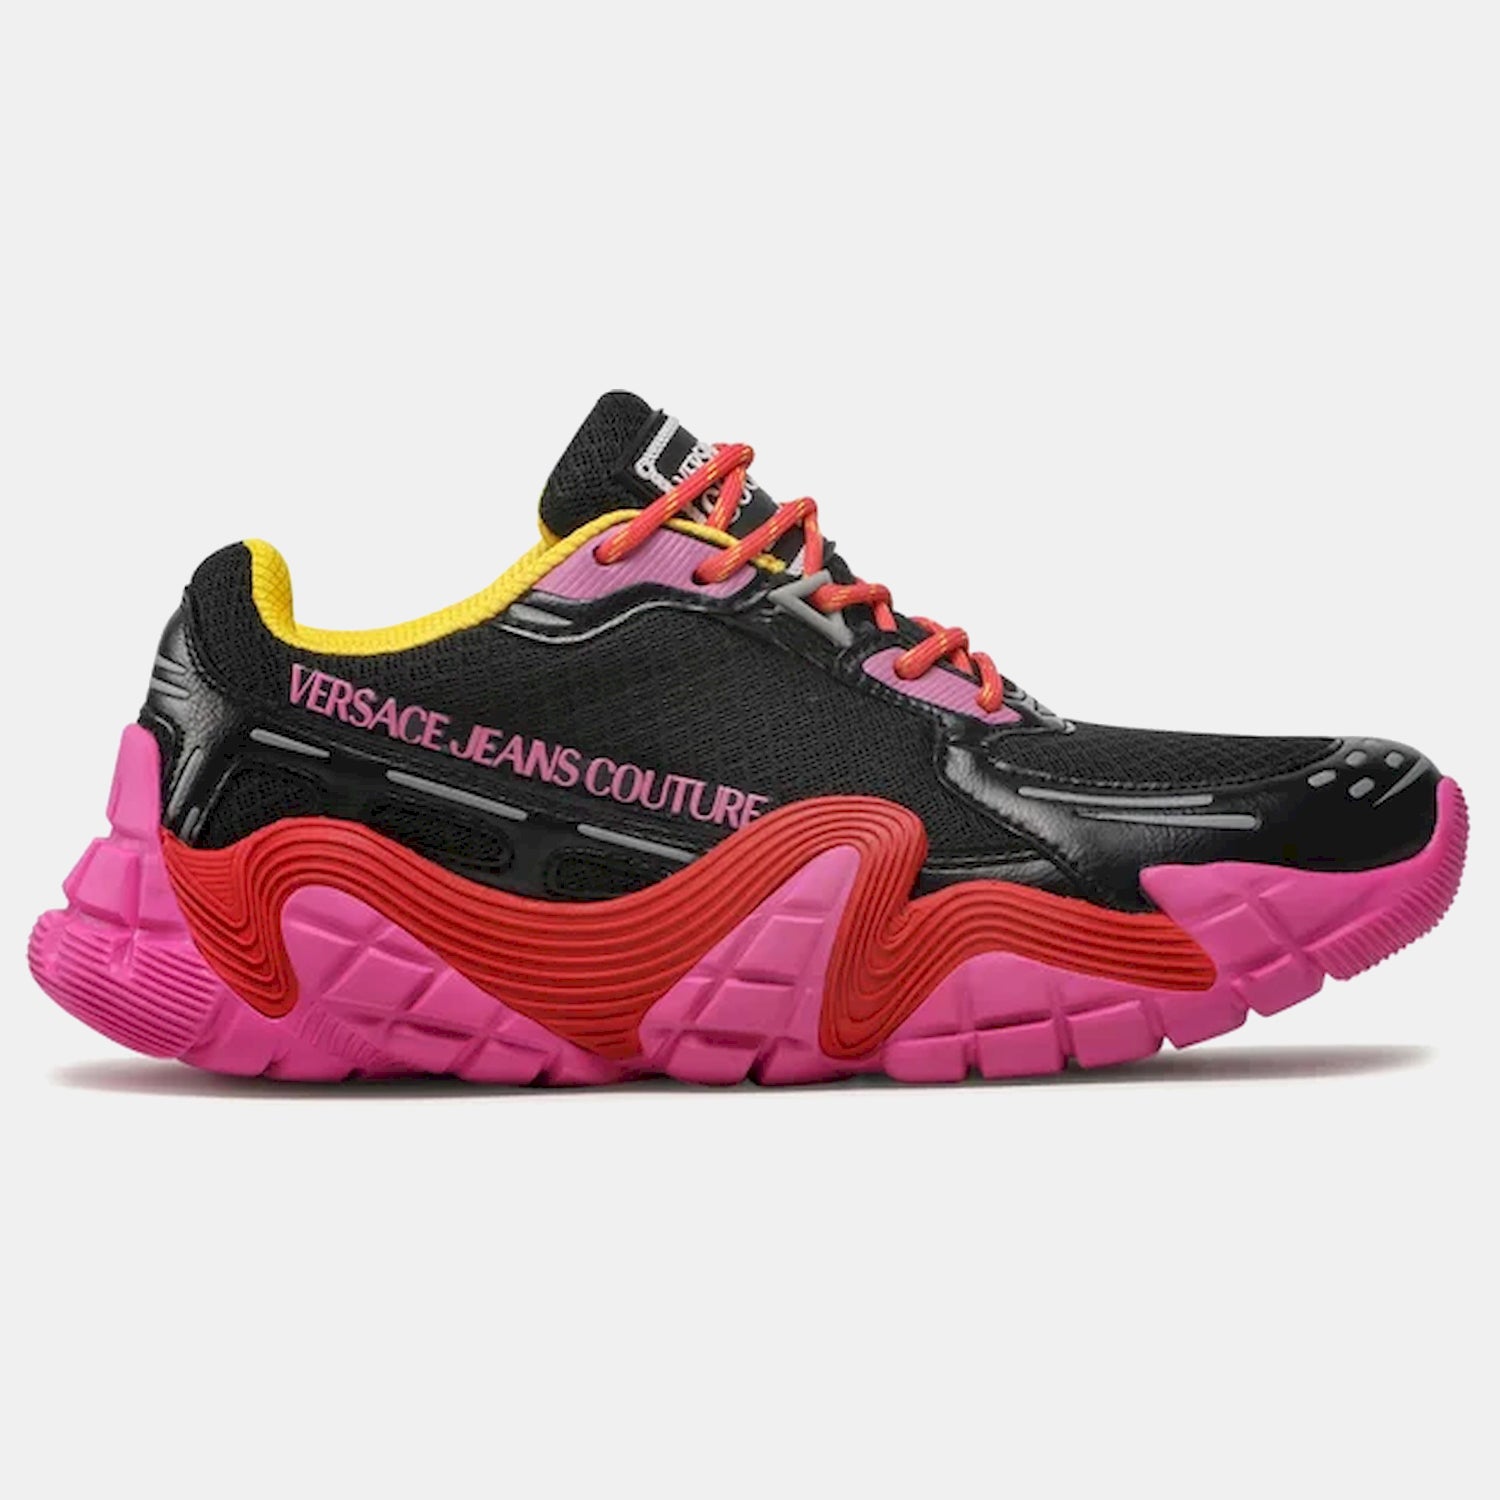 Versace Sapatilhas Sneakers Shoes 72ya3sh6 Black Pink Preto Rosa_shot1